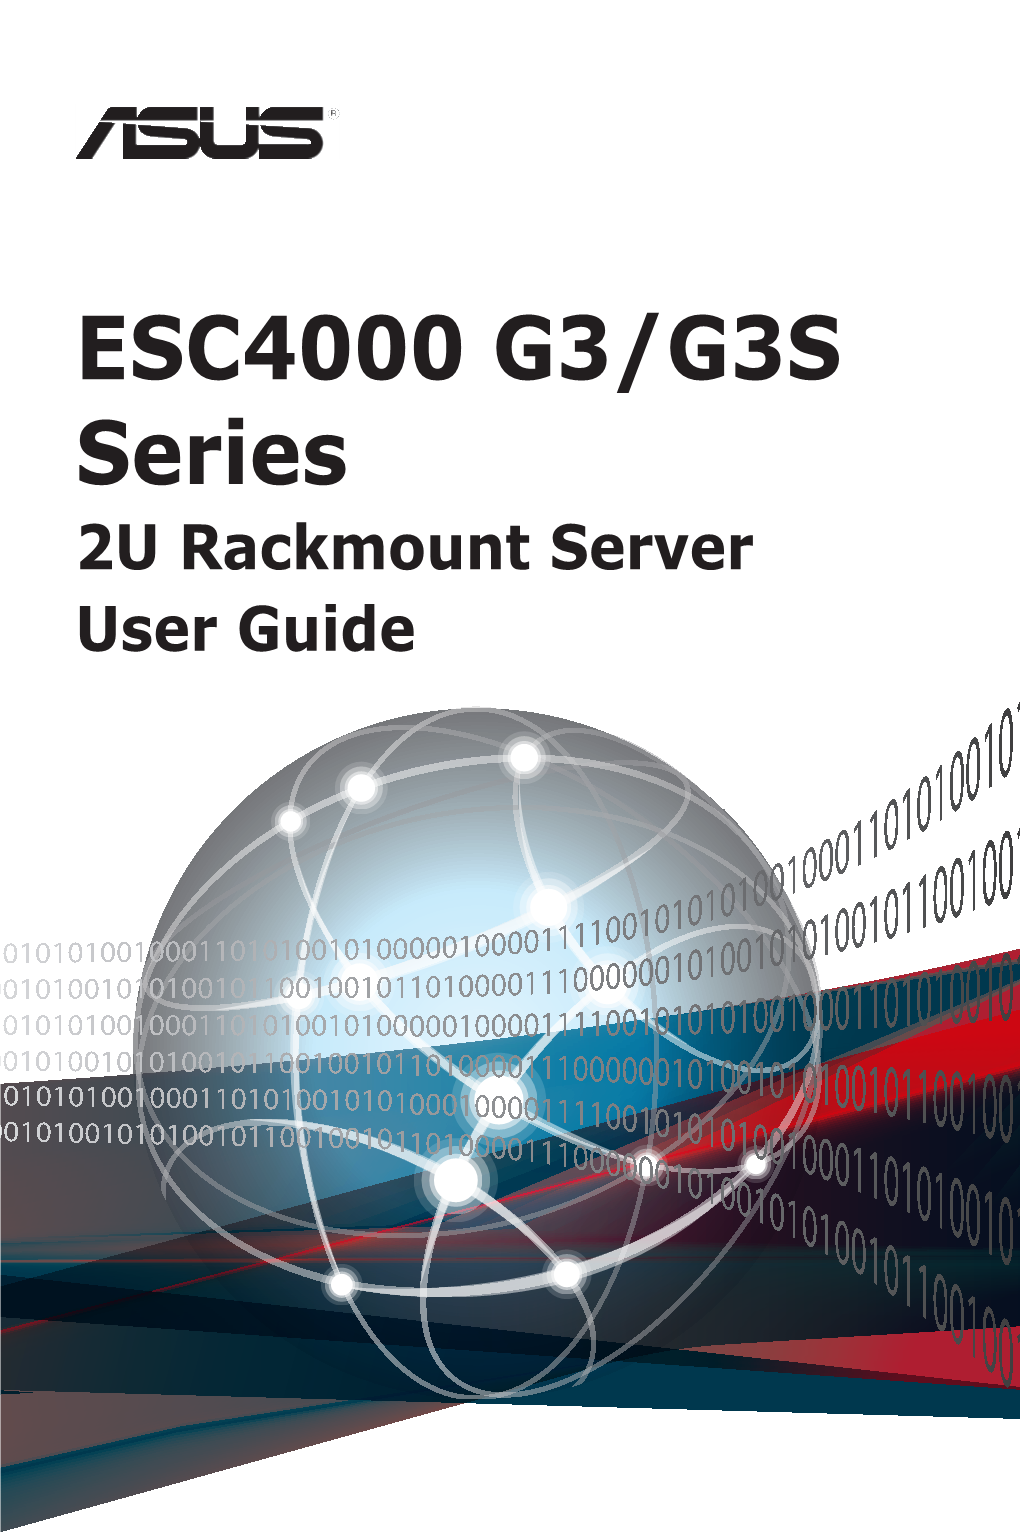 ESC4000 G3/G3S Series 2U Rackmount Server User Guide E9711 First Edition October 2014